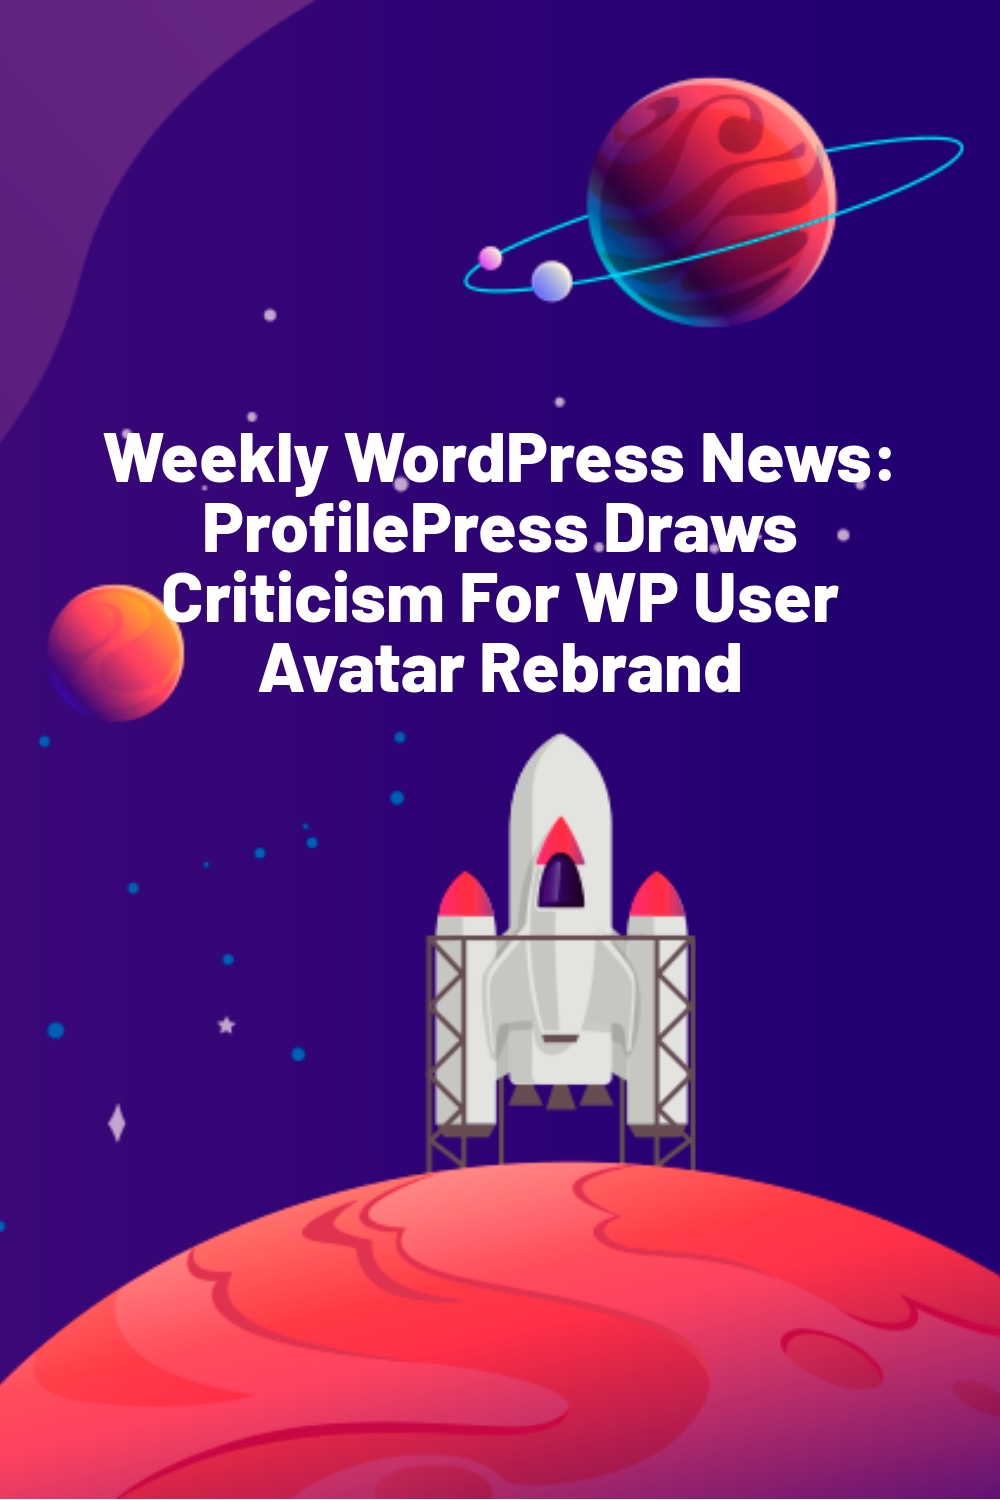 Weekly WordPress News: ProfilePress Draws Criticism For WP User Avatar Rebrand